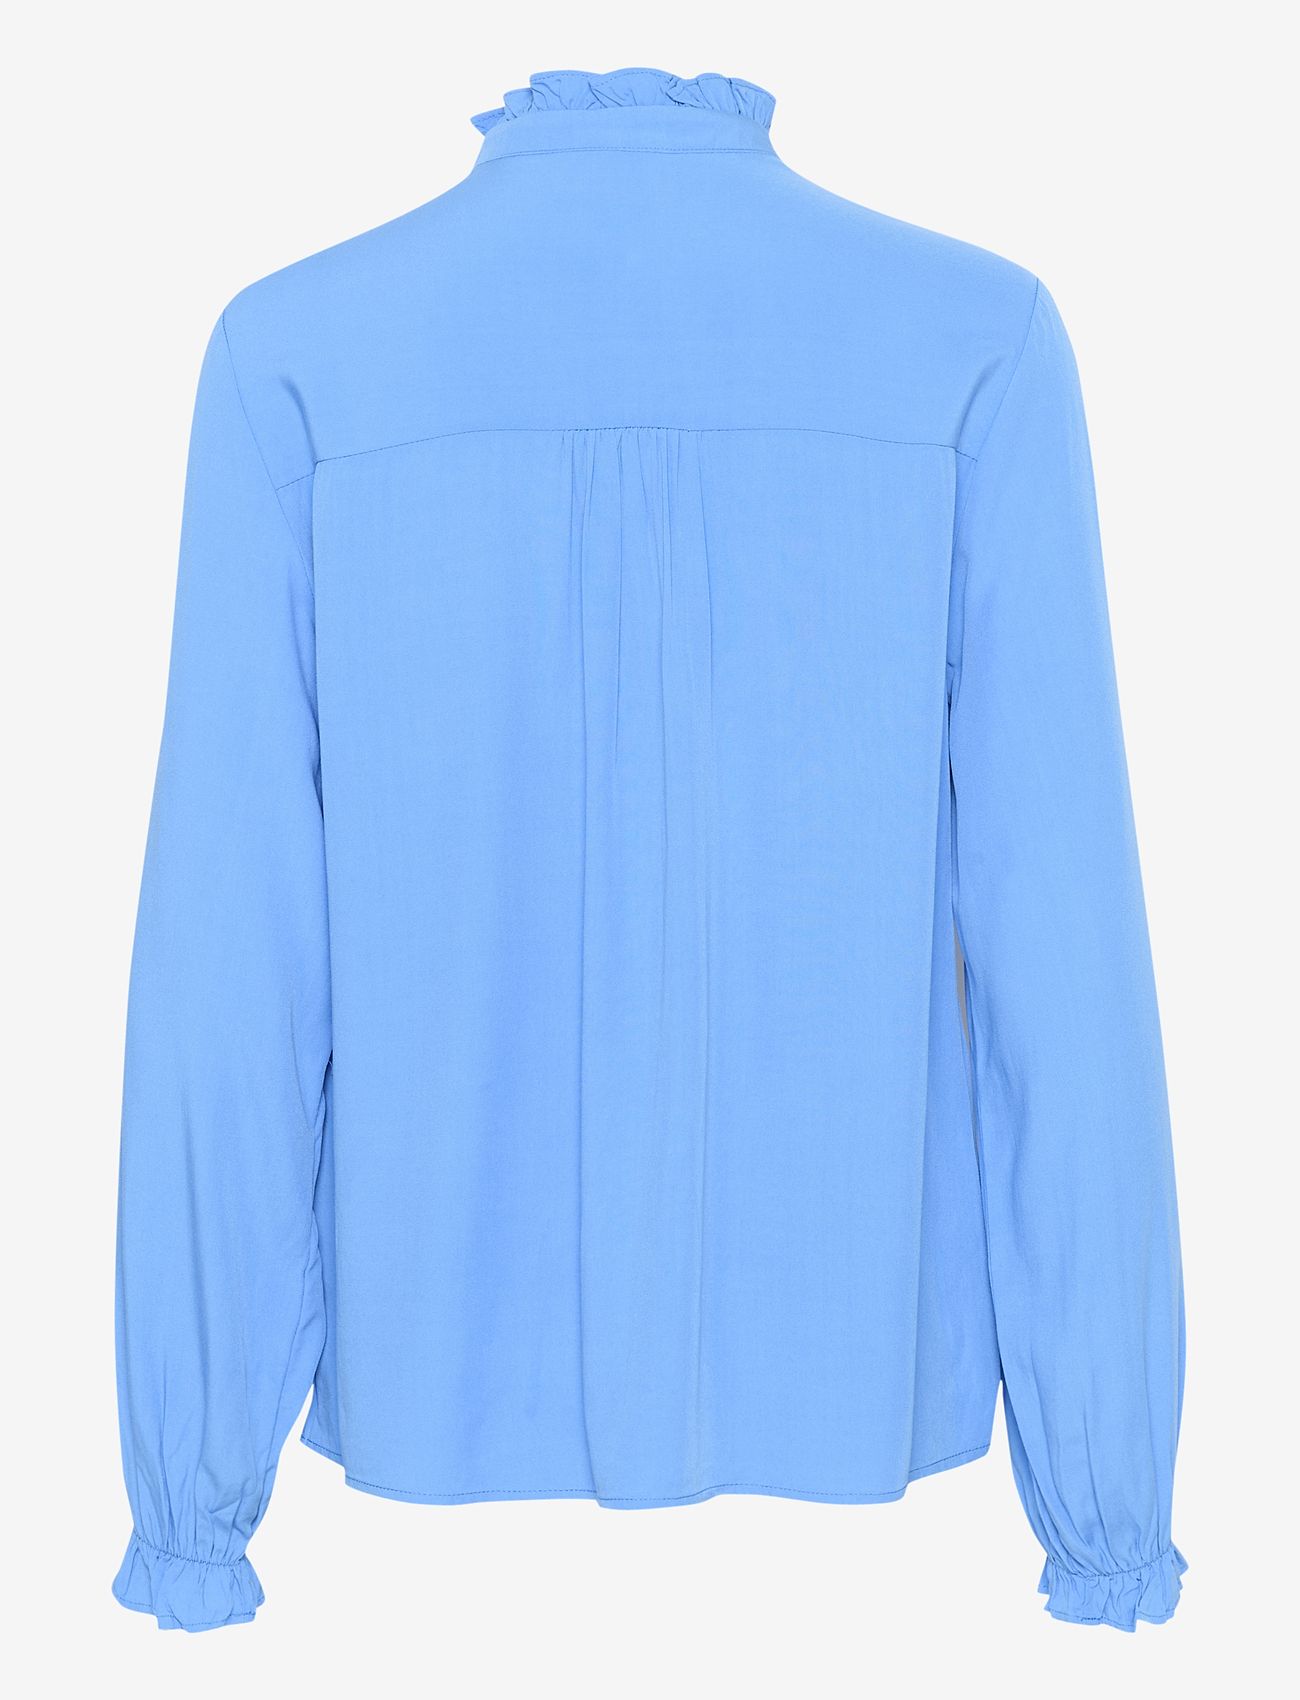 Cream - CRVenea Shirt - langärmlige hemden - marina - 1